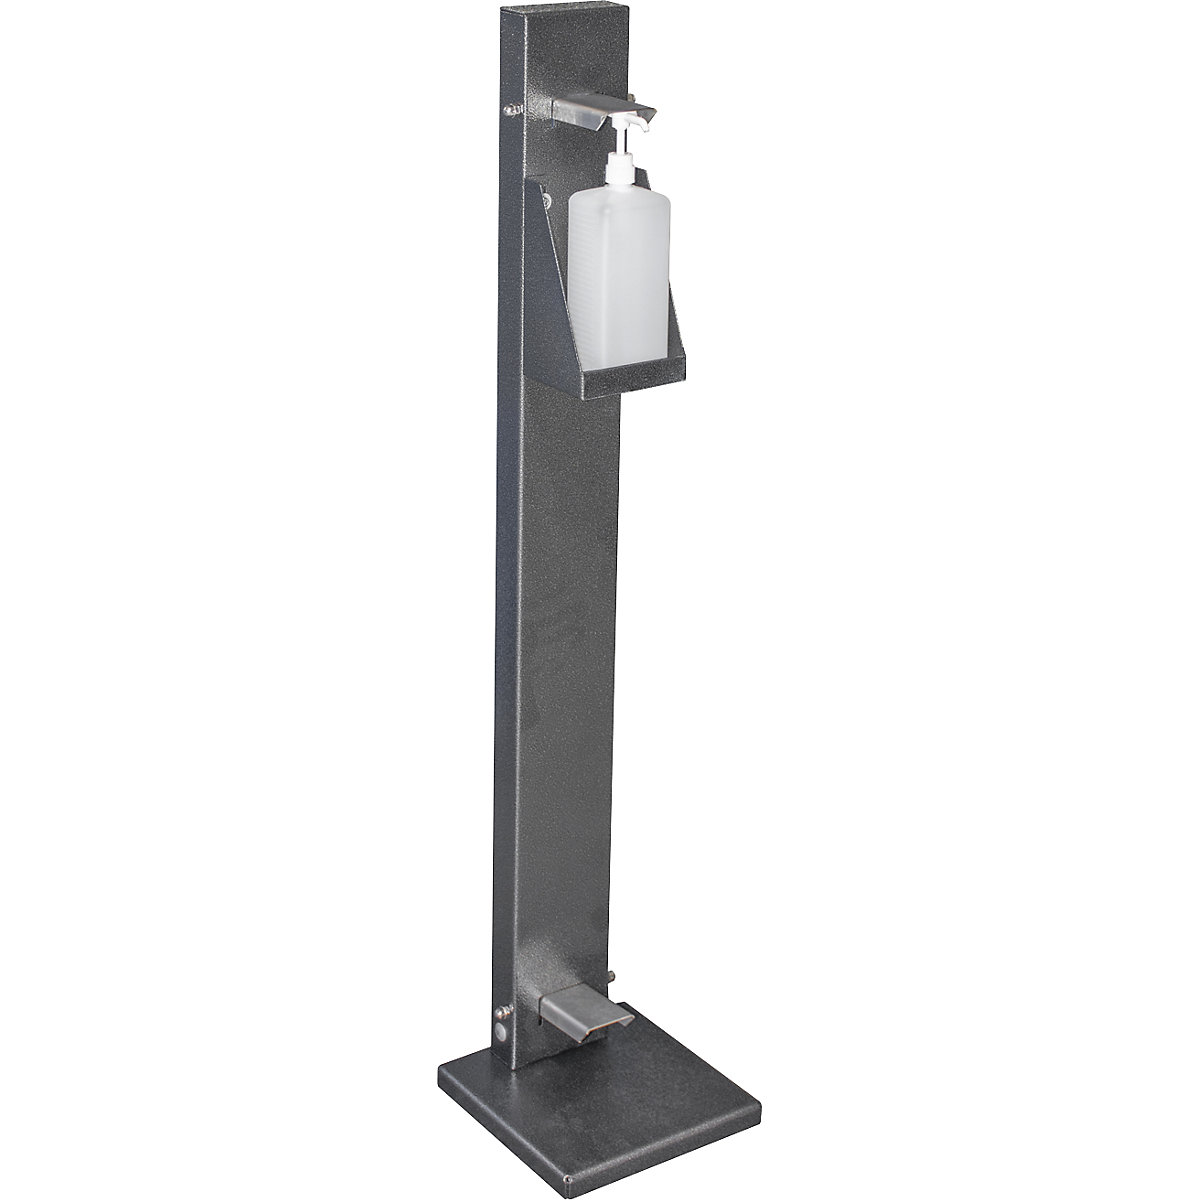 Pedal disinfectant/soap dispenser stand - eurokraft pro